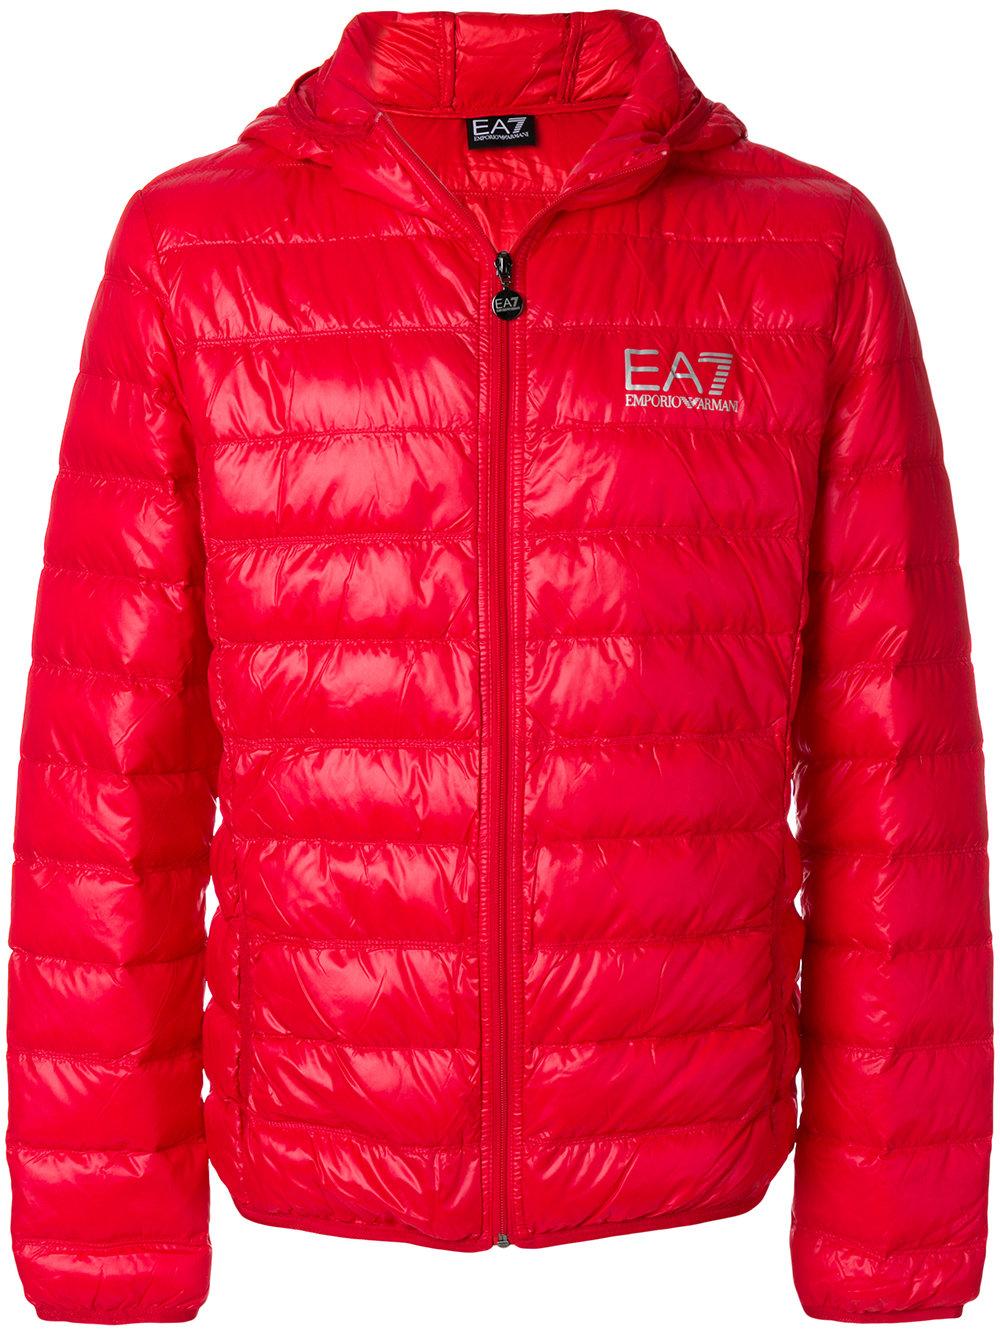 red ea7 jacket